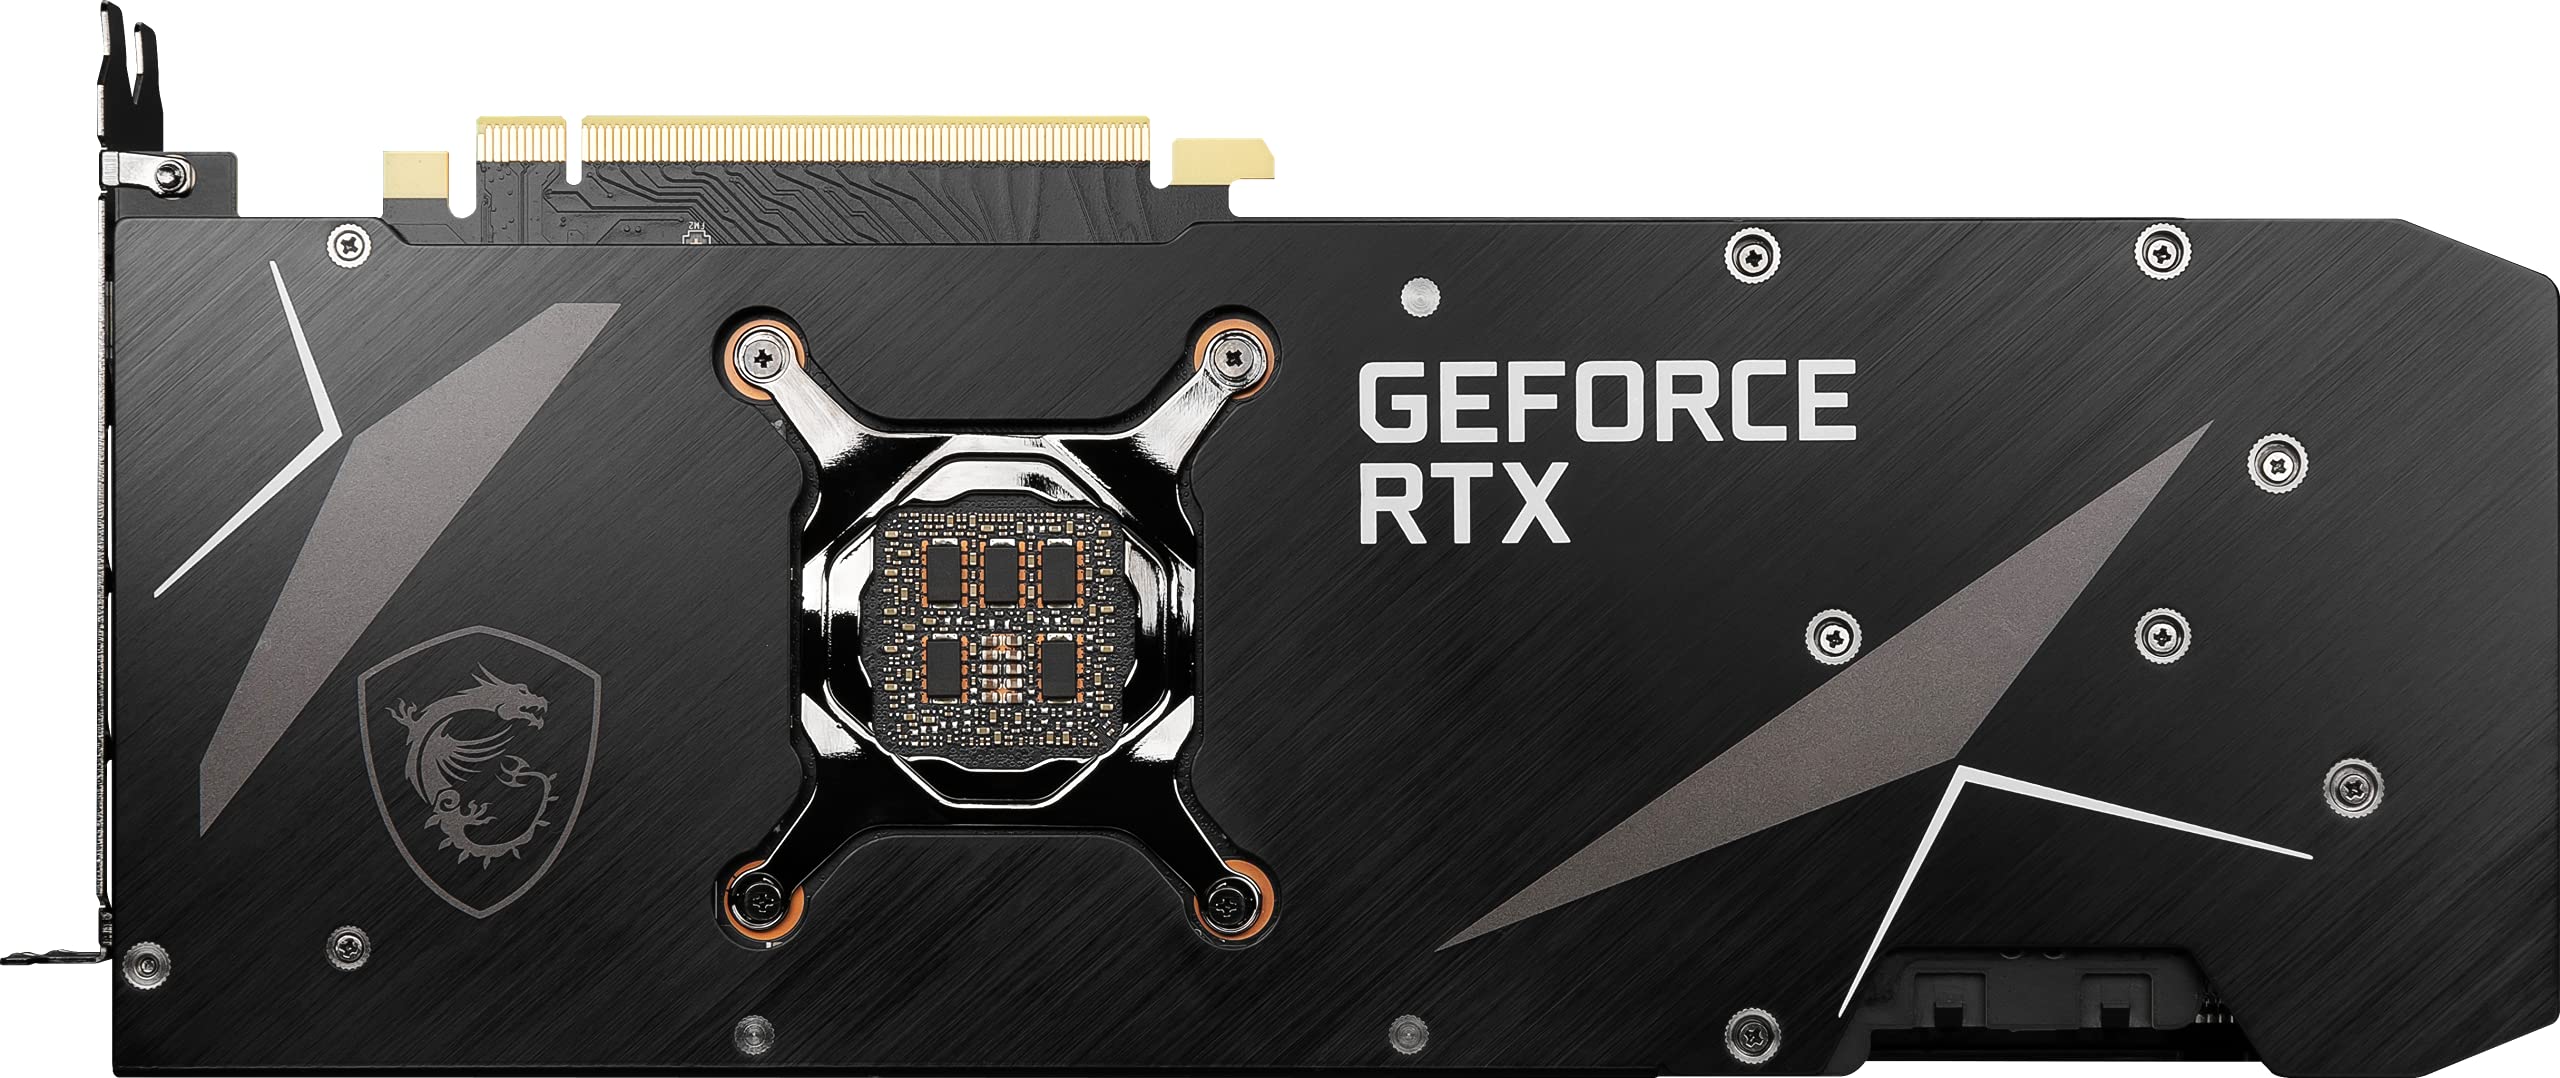 MSI GeForce RTX 3080 VENTUS 3X PLUS 10G OC LHR Gaming Graphics Card - 10GB GDDR6X, 1740MHz, PCI Express Gen 4, 320-bit , 3x DP v 1.4a, HDMI 2.1 (Supports 4K)